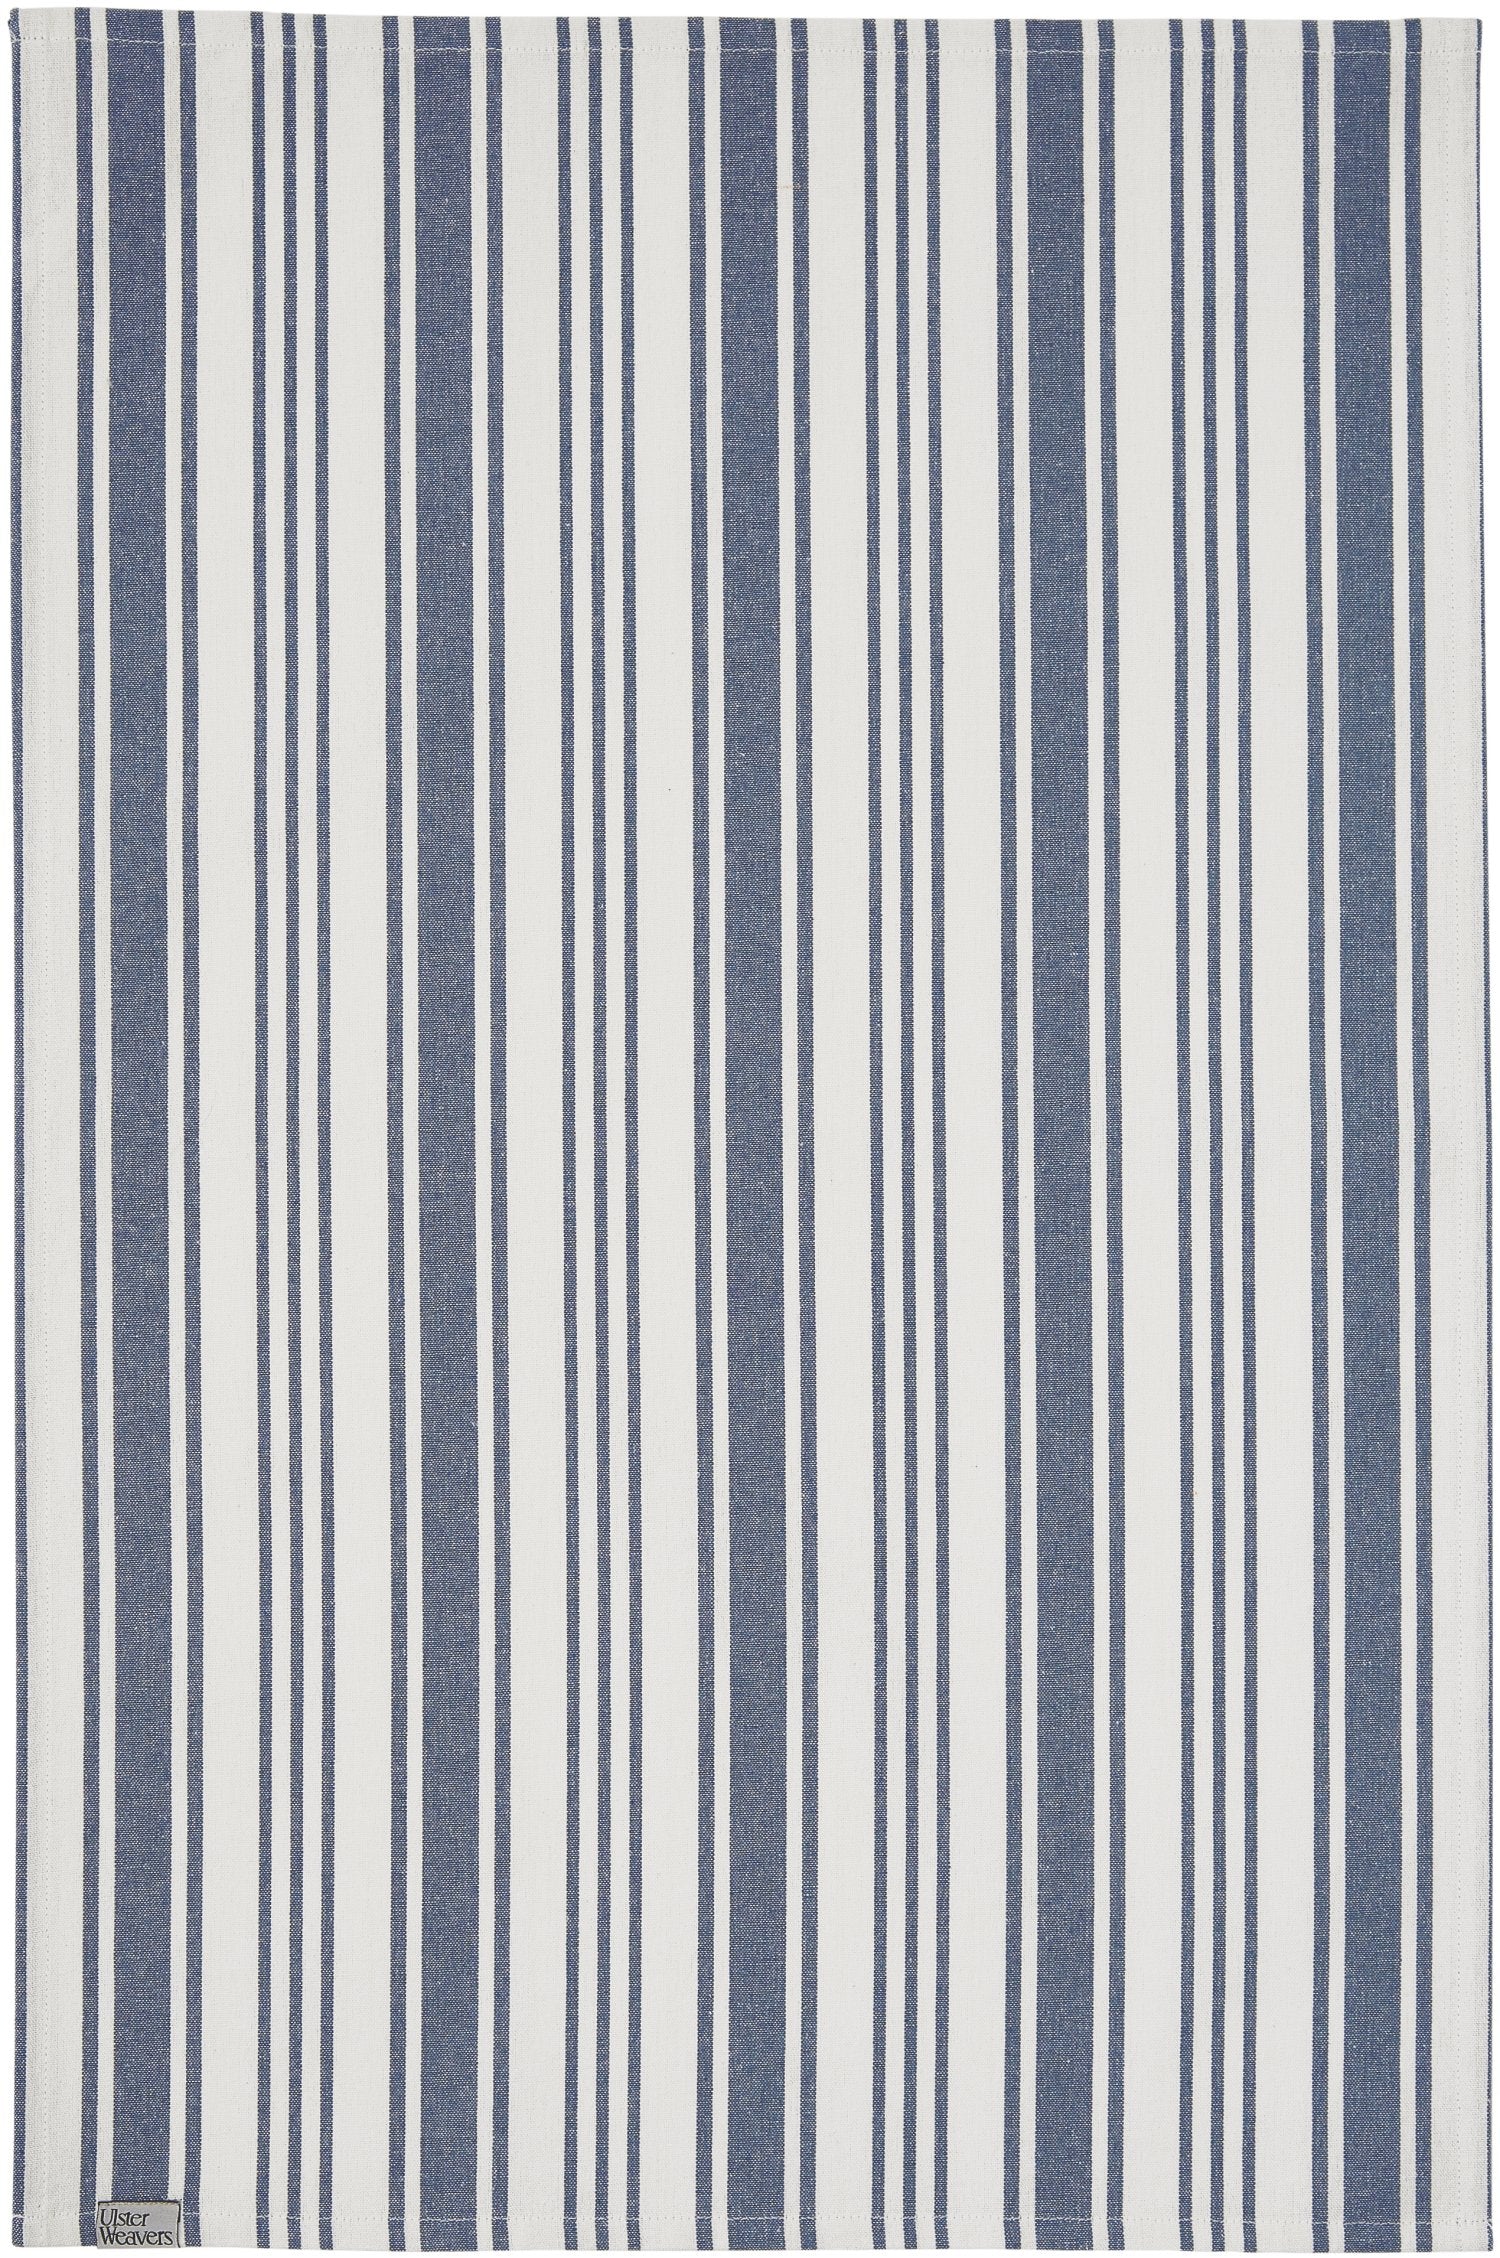 Ulster Weavers, "Denim Stripe", Printed cotton tea towel.